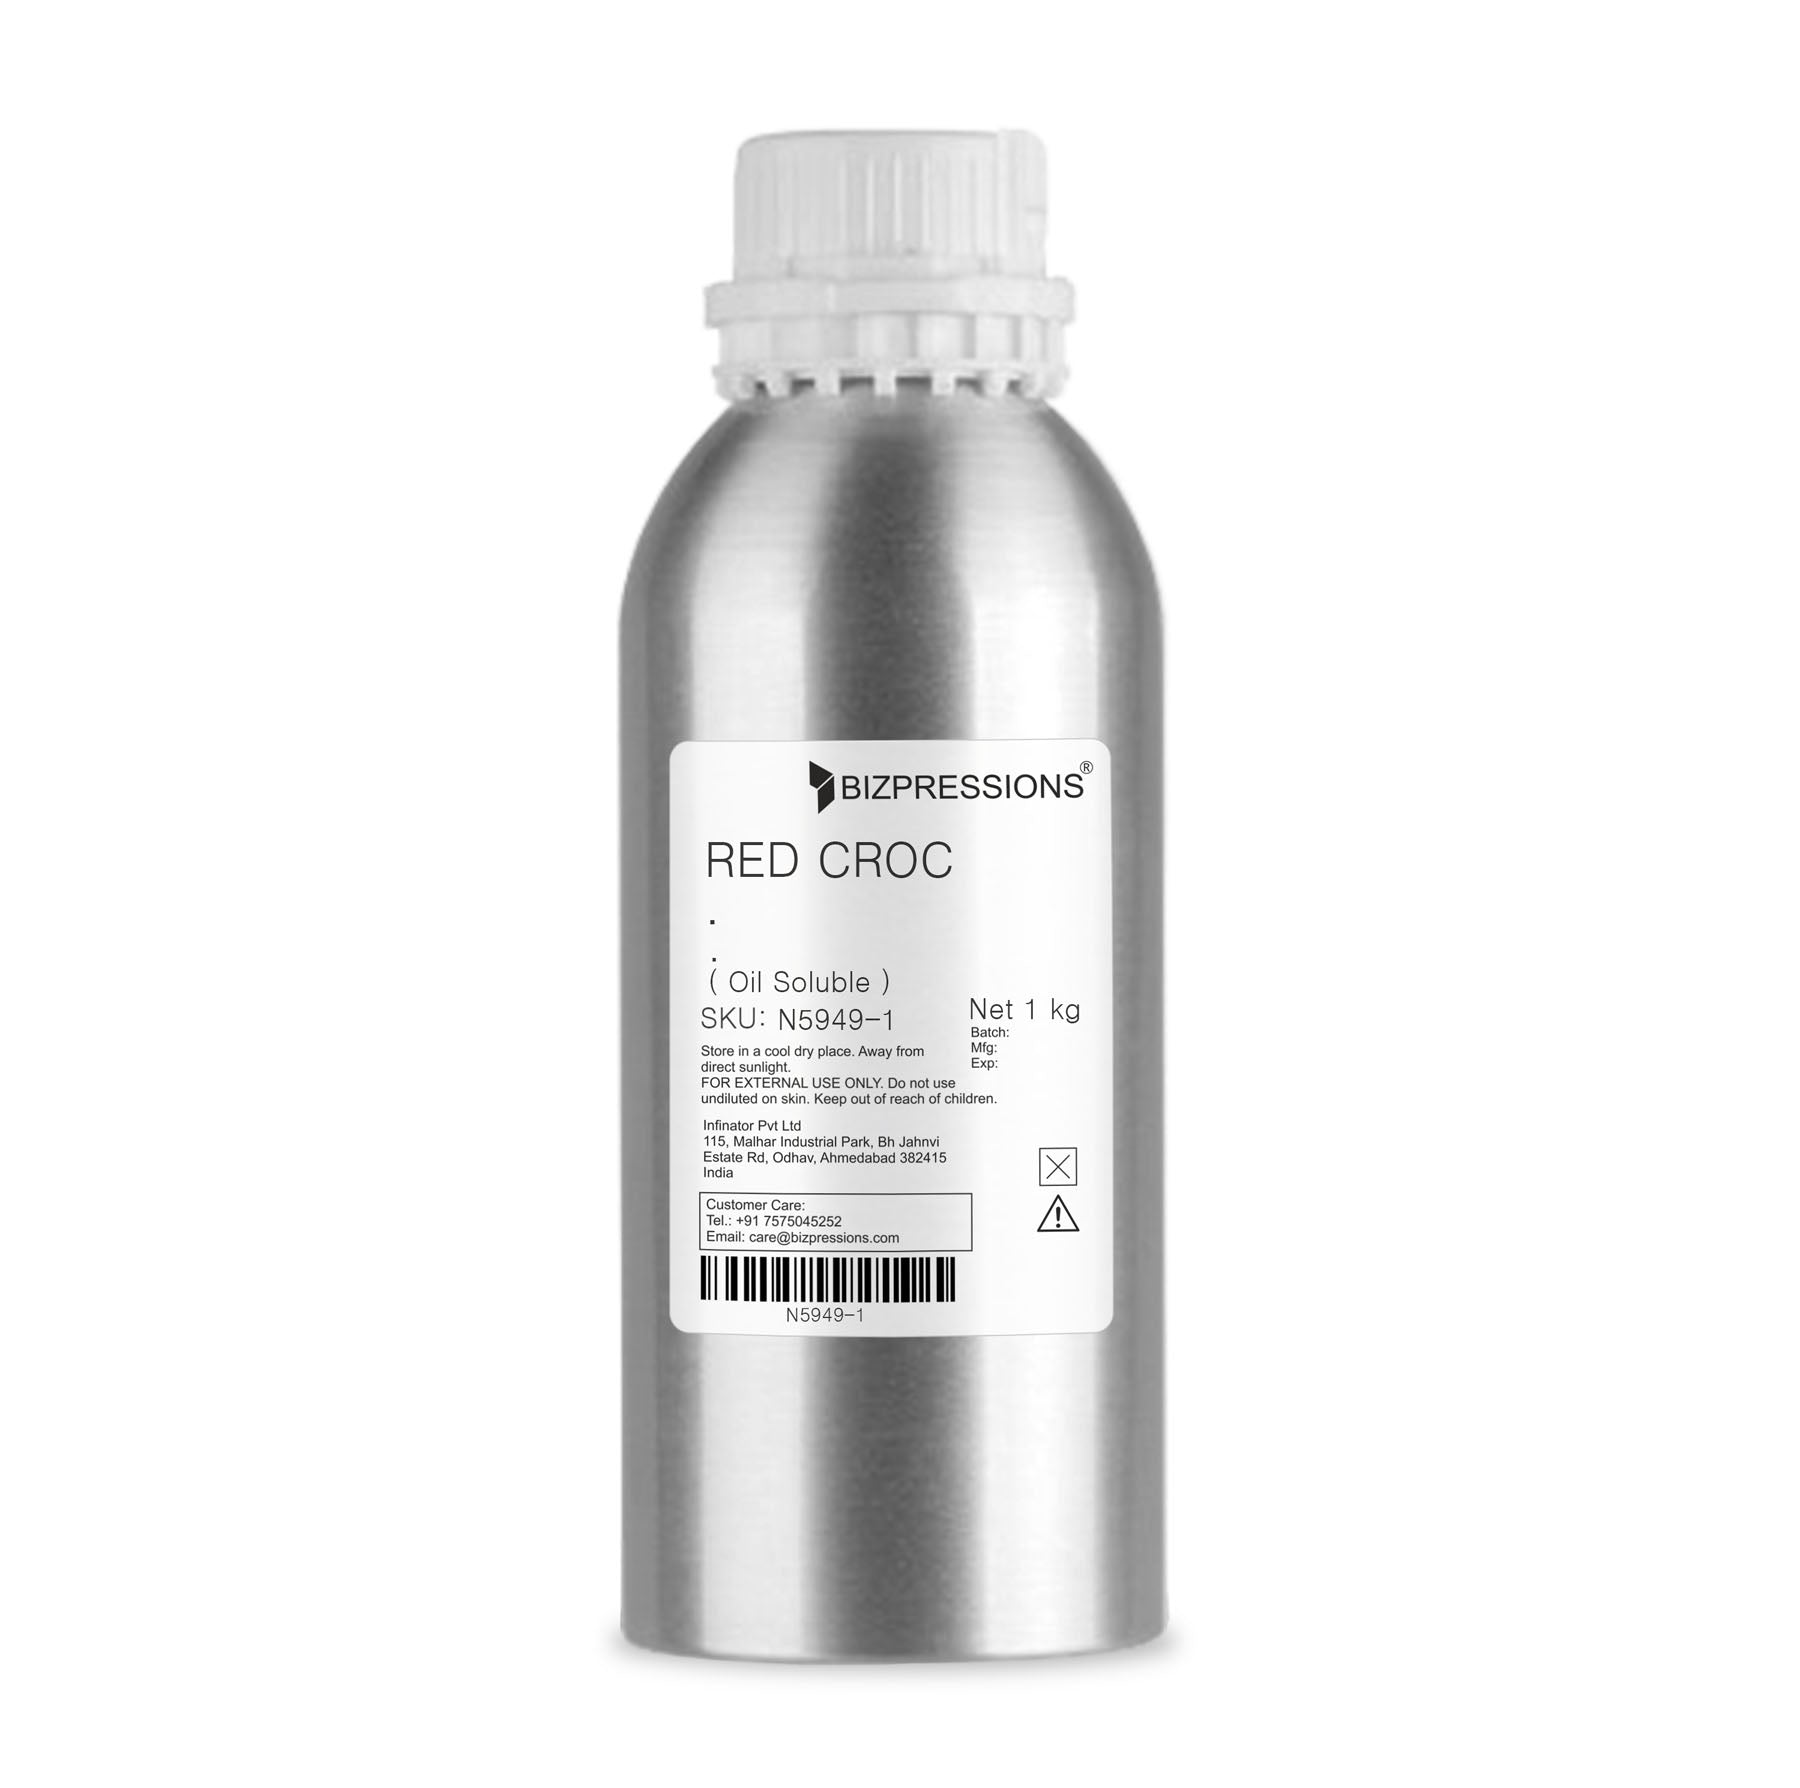 RED CROC - Fragrance ( Oil Soluble ) - 1 kg